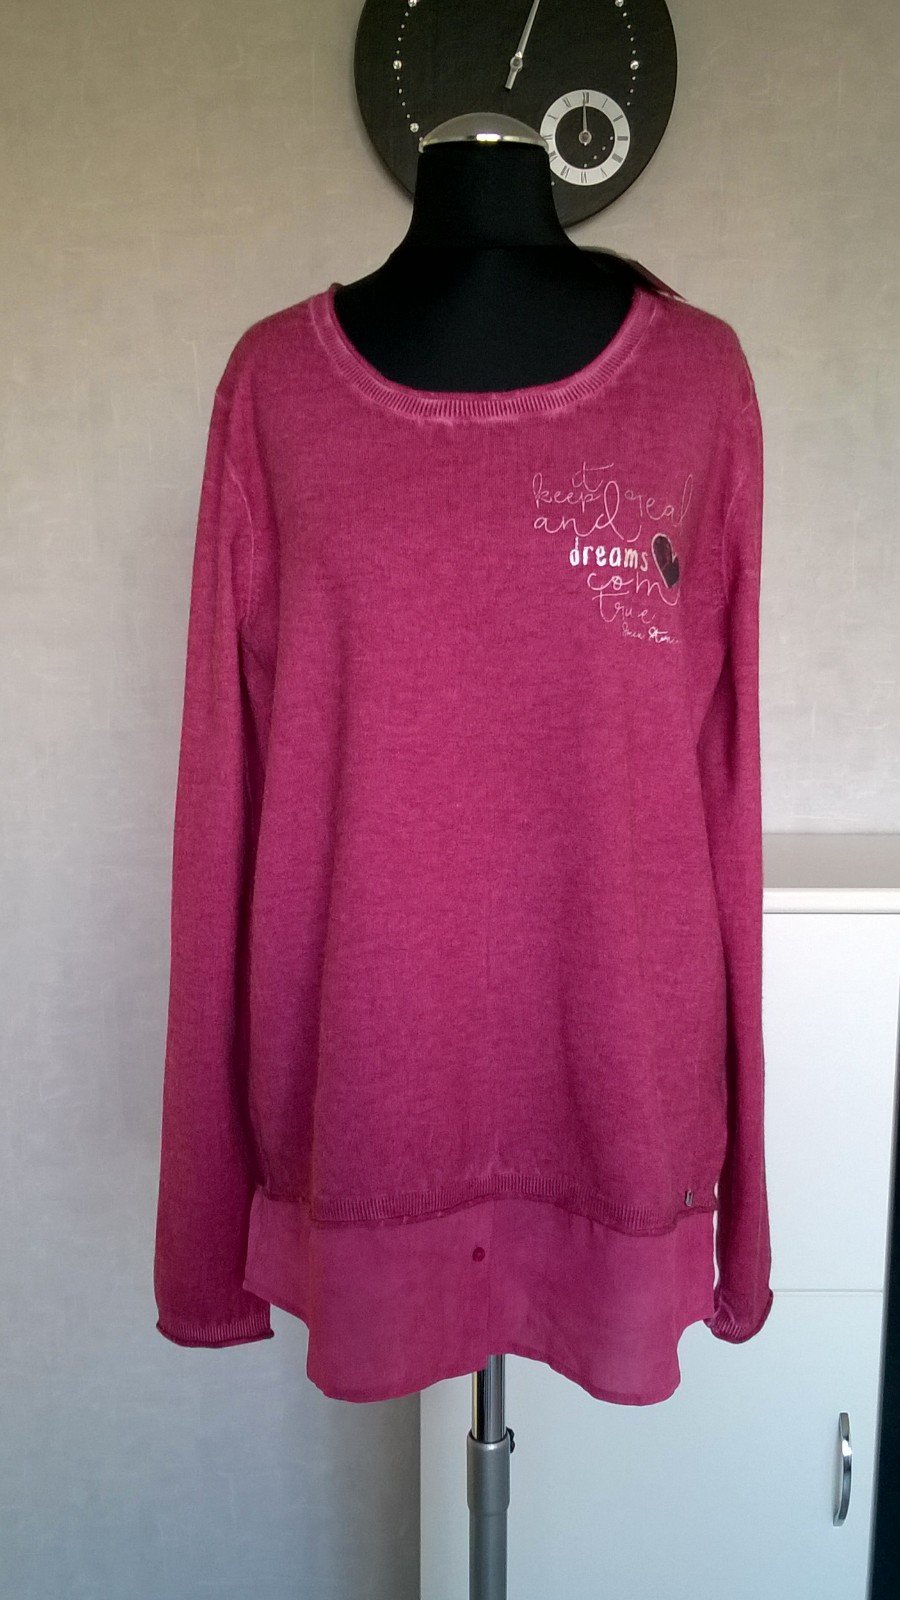 Longpulli Longpullover Pulli Pullover 2-in-1 mit Bluse Langarm pink Gr. S  Soccx neu mit Etikett